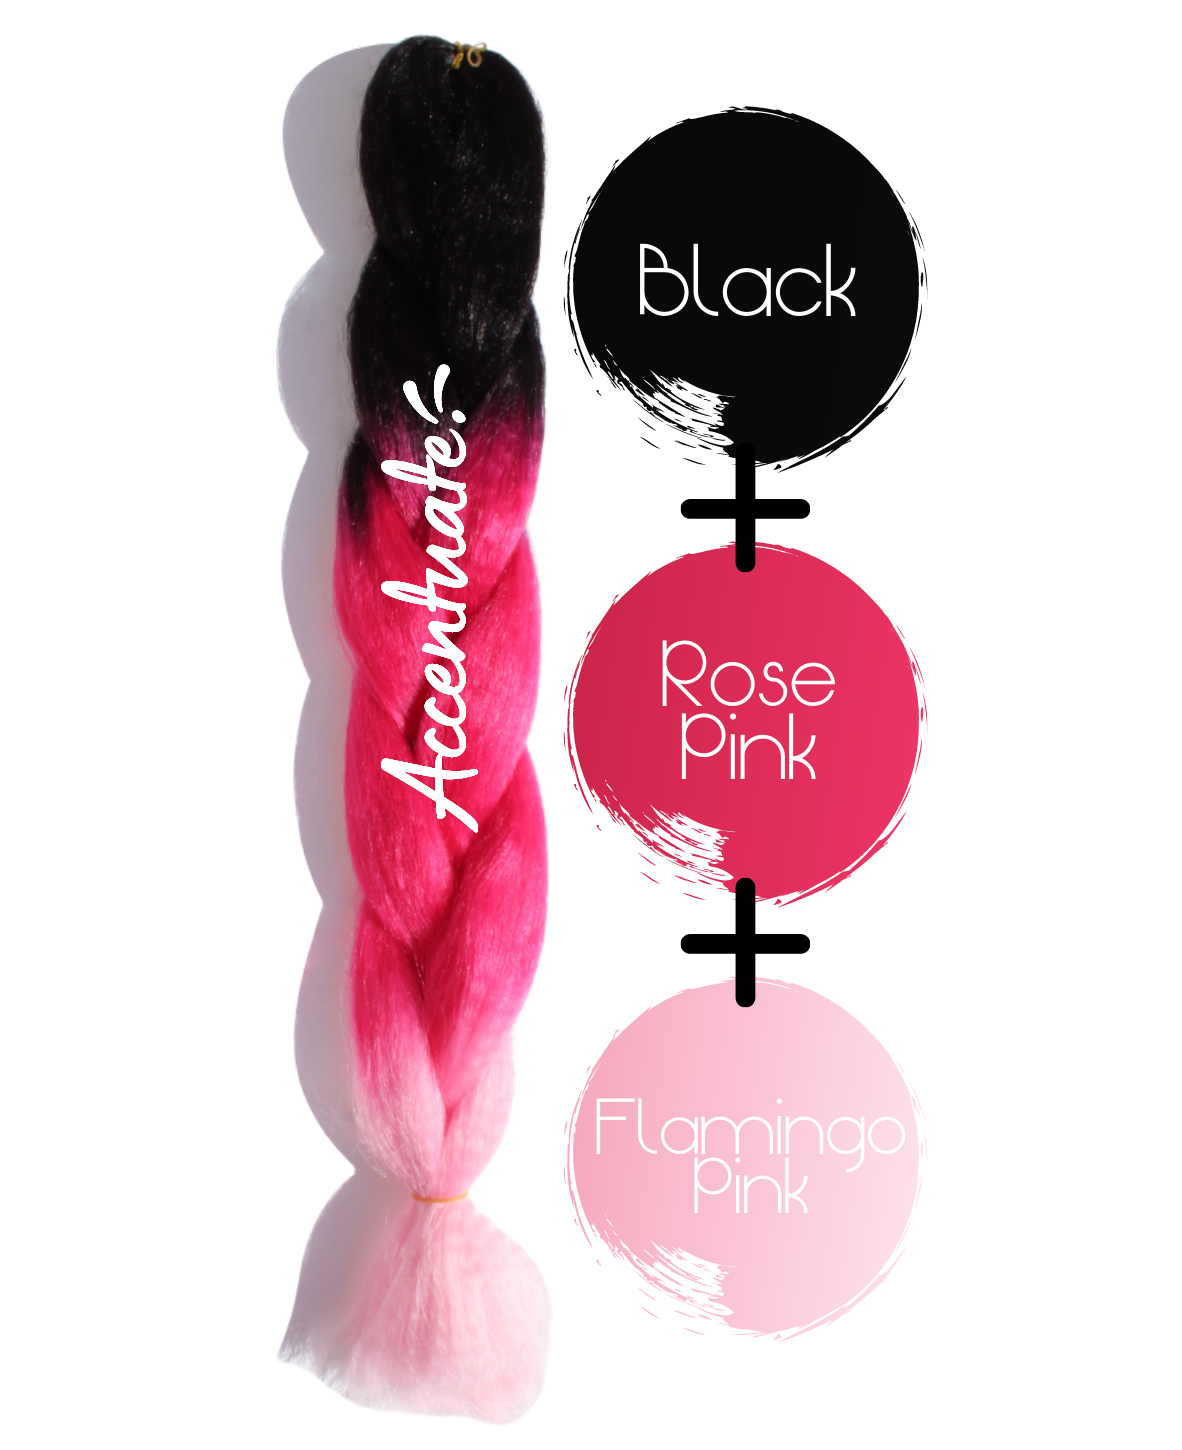 24" Black + Rose Pink + Flamingo Pink Ombré Jumbo Braid Hair Extension